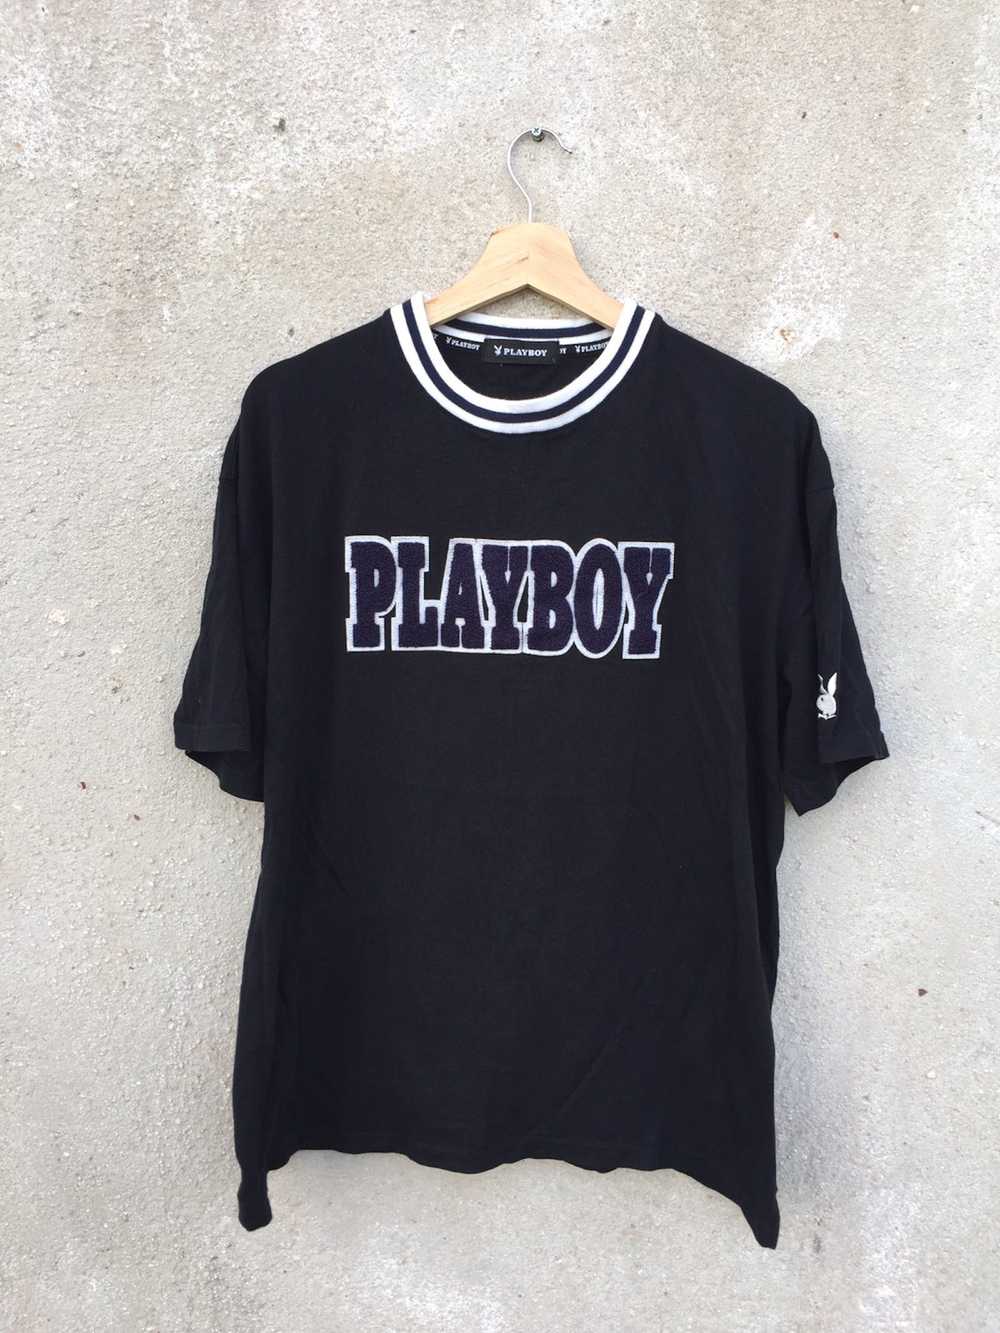 Playboy Playboy with big logo short sleeve t shir… - image 1